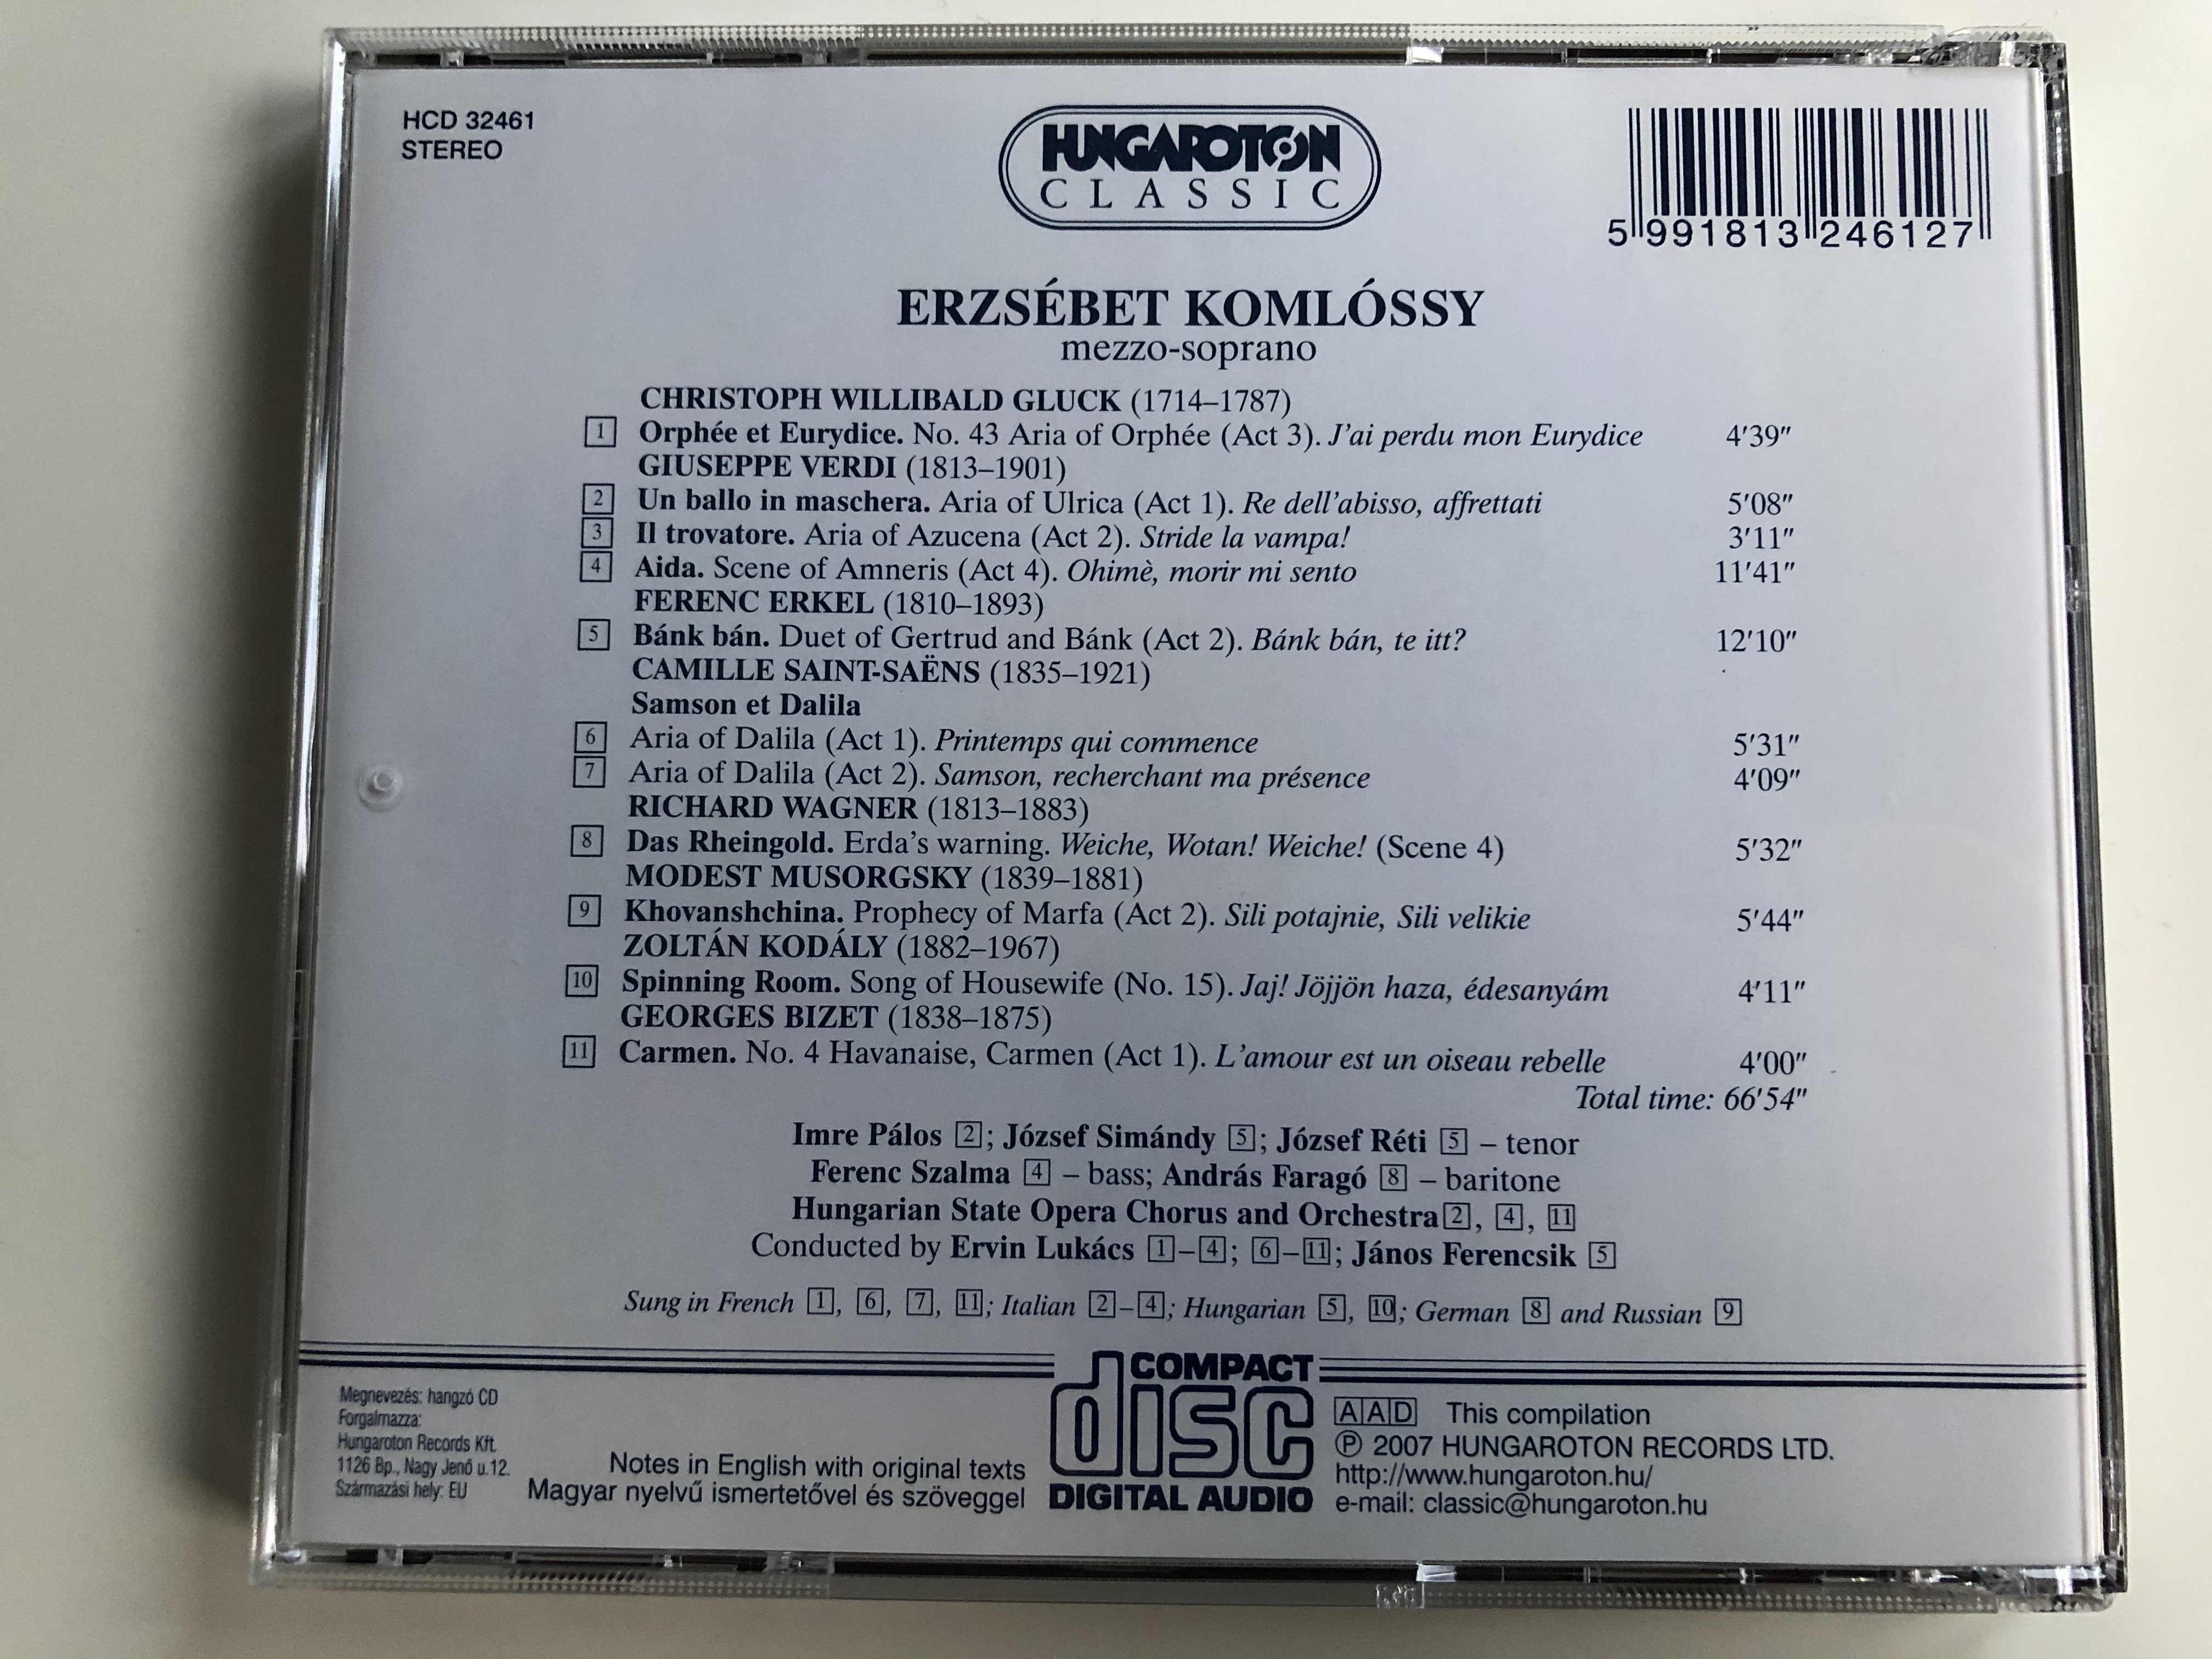 erzsebet-komlossy-mezzo-soprano-gluck-verdi-erkel-saint-saens-wagner-musorgsky-kodaly-bizet-hungaroton-classic-audio-cd-2007-stereo-hcd-32461-9-.jpg